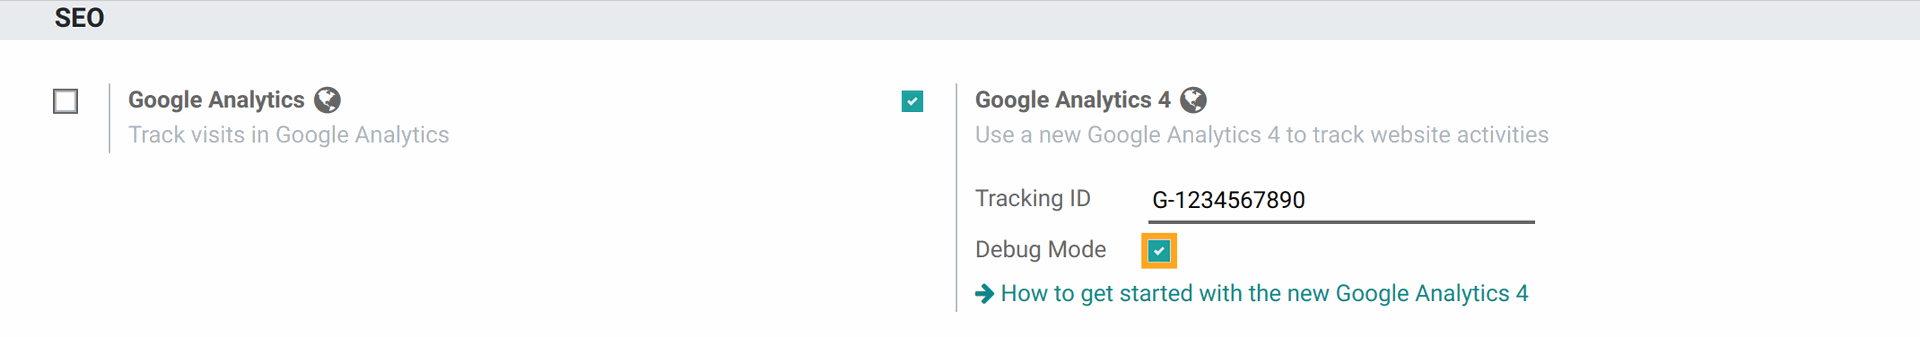 Odoo False Google Analytics 4 Global Site Tag (gtag.js) configuration